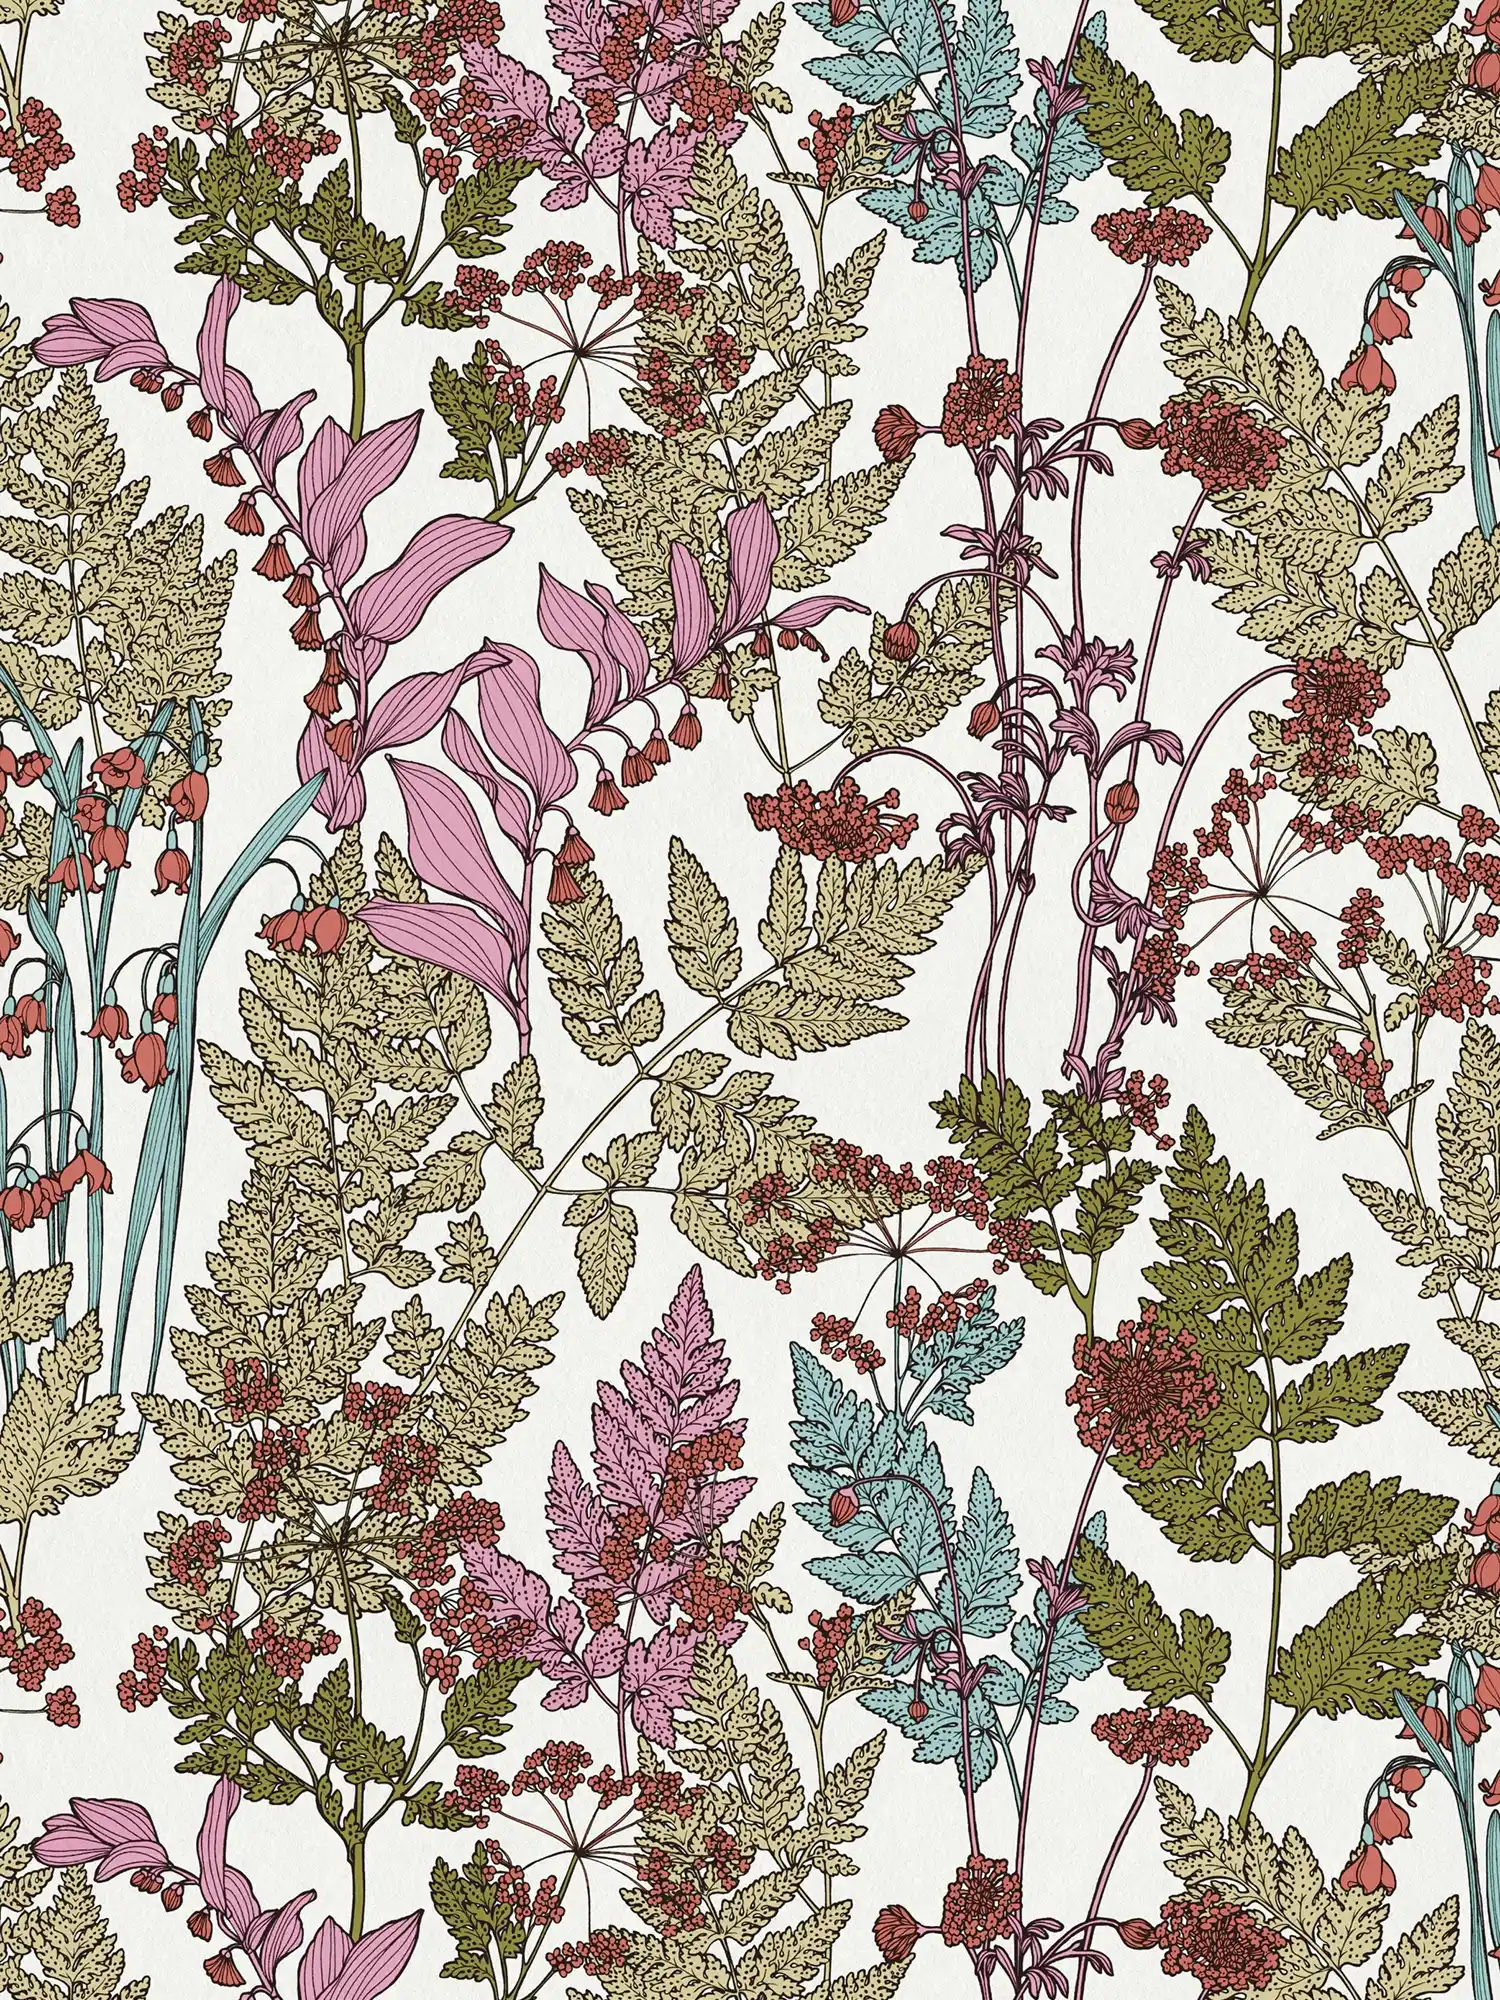         Tapete Blätter & Blumen Design im modern Botanical Stil – Bunt, Grün, Blau
    